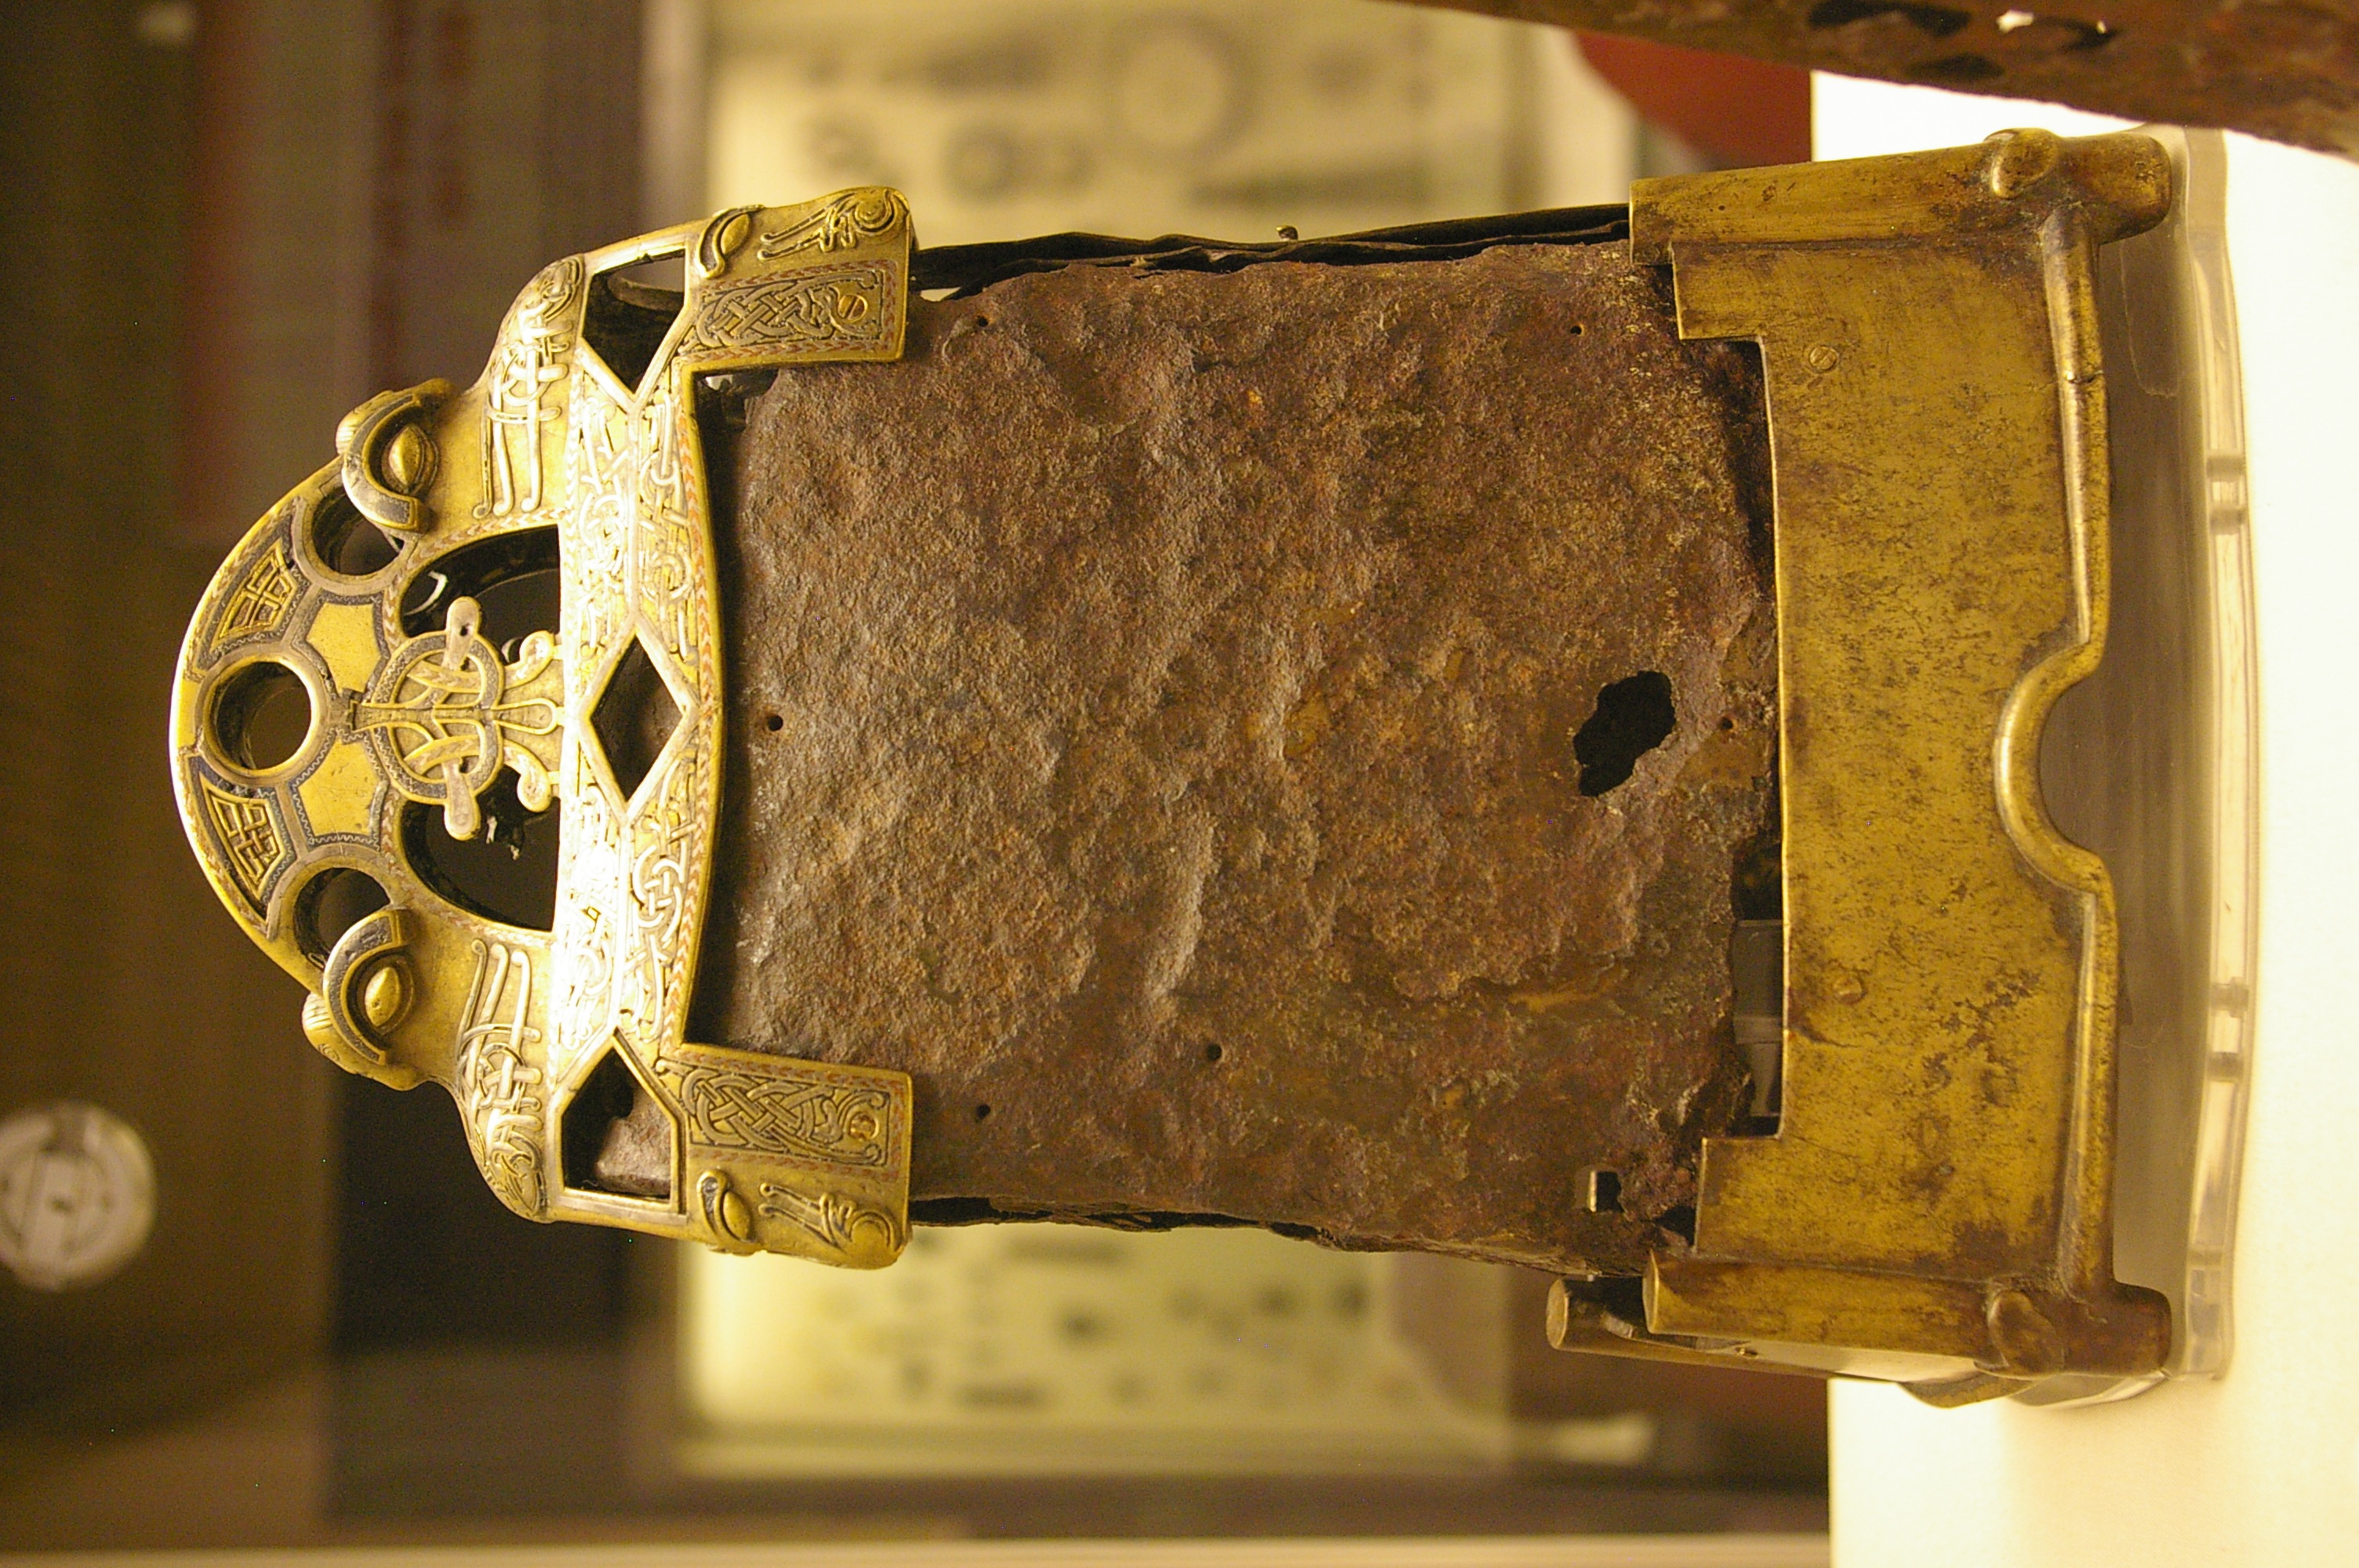 Cloche de Saint Cuilean by Artiste Inconnu - 8th - 11th century British Museum